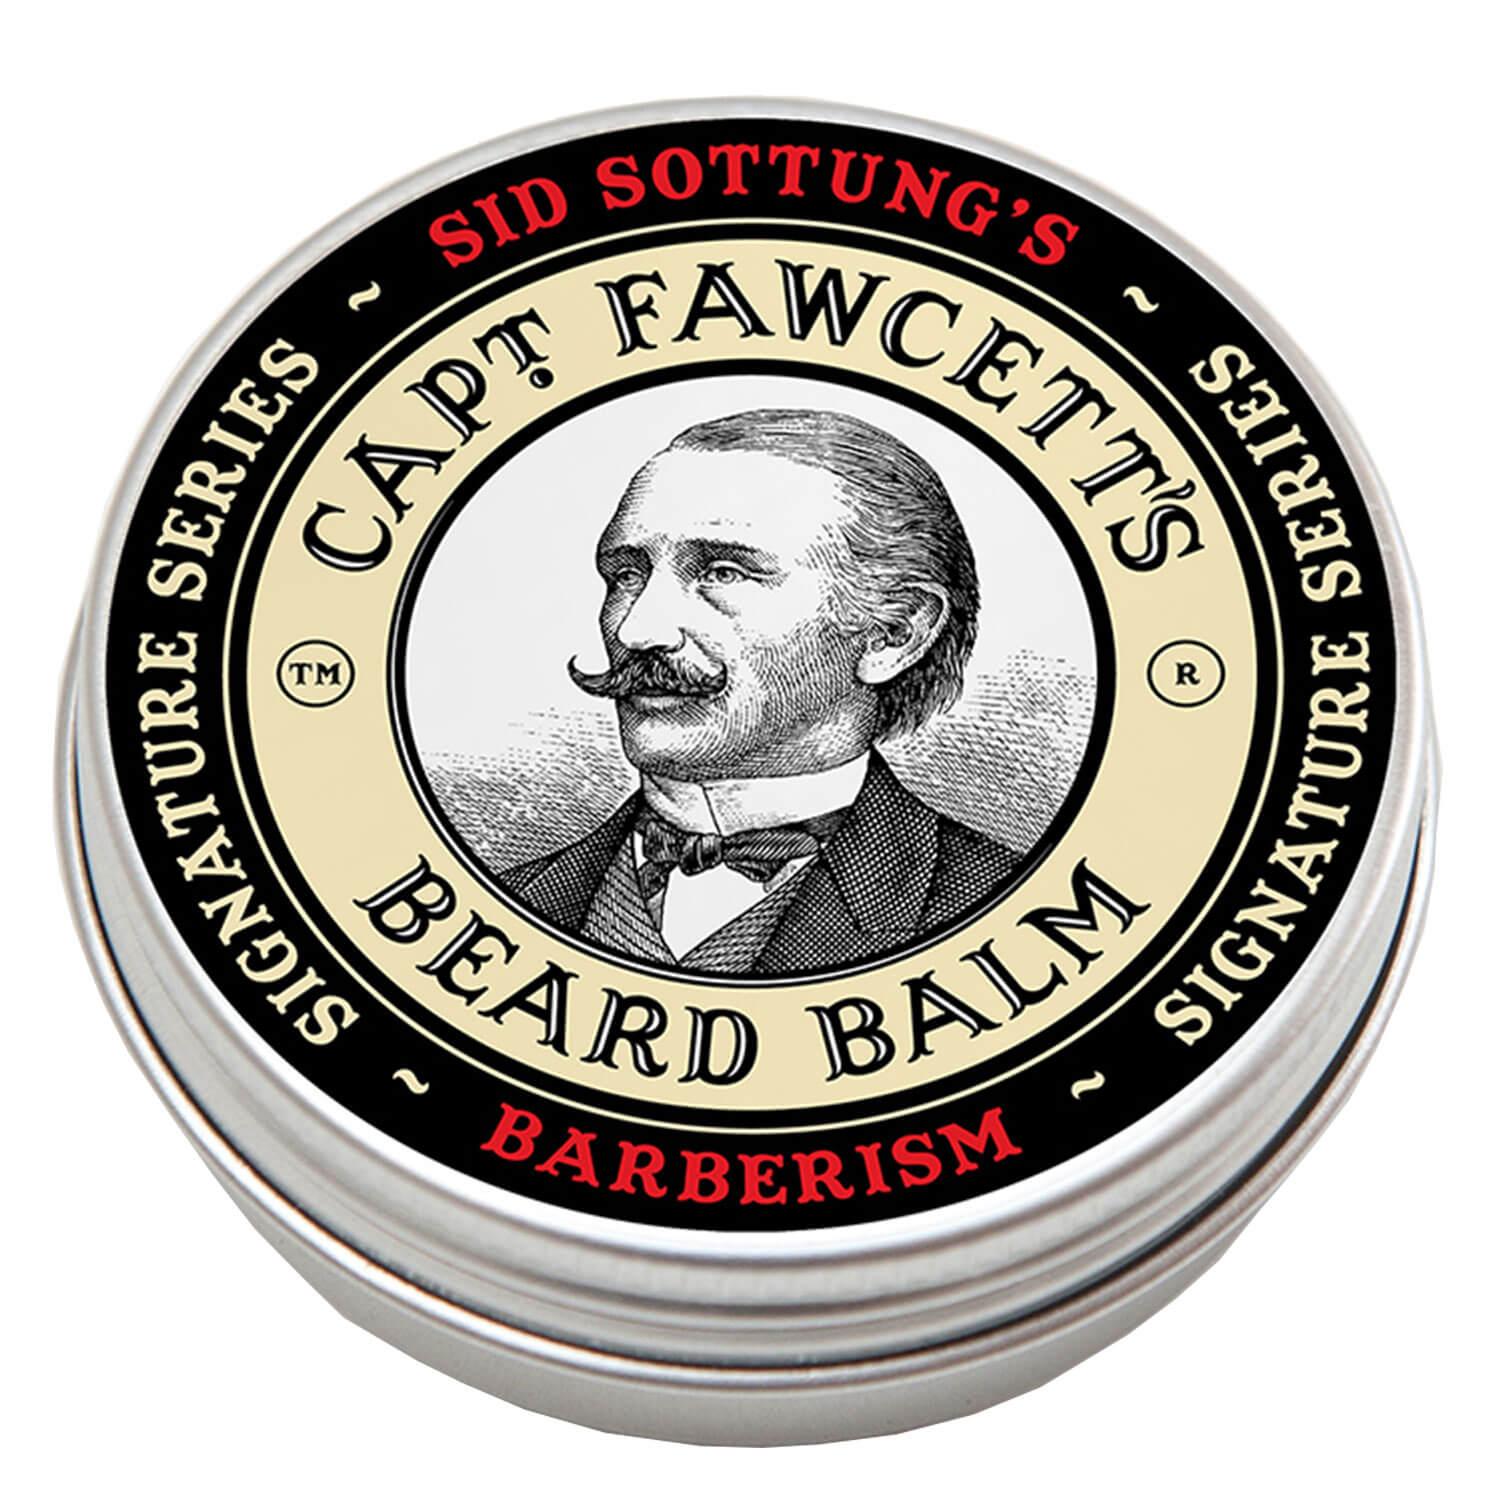 Capt. Fawcett Care - Sid Sottung's Barberism Beard Balm